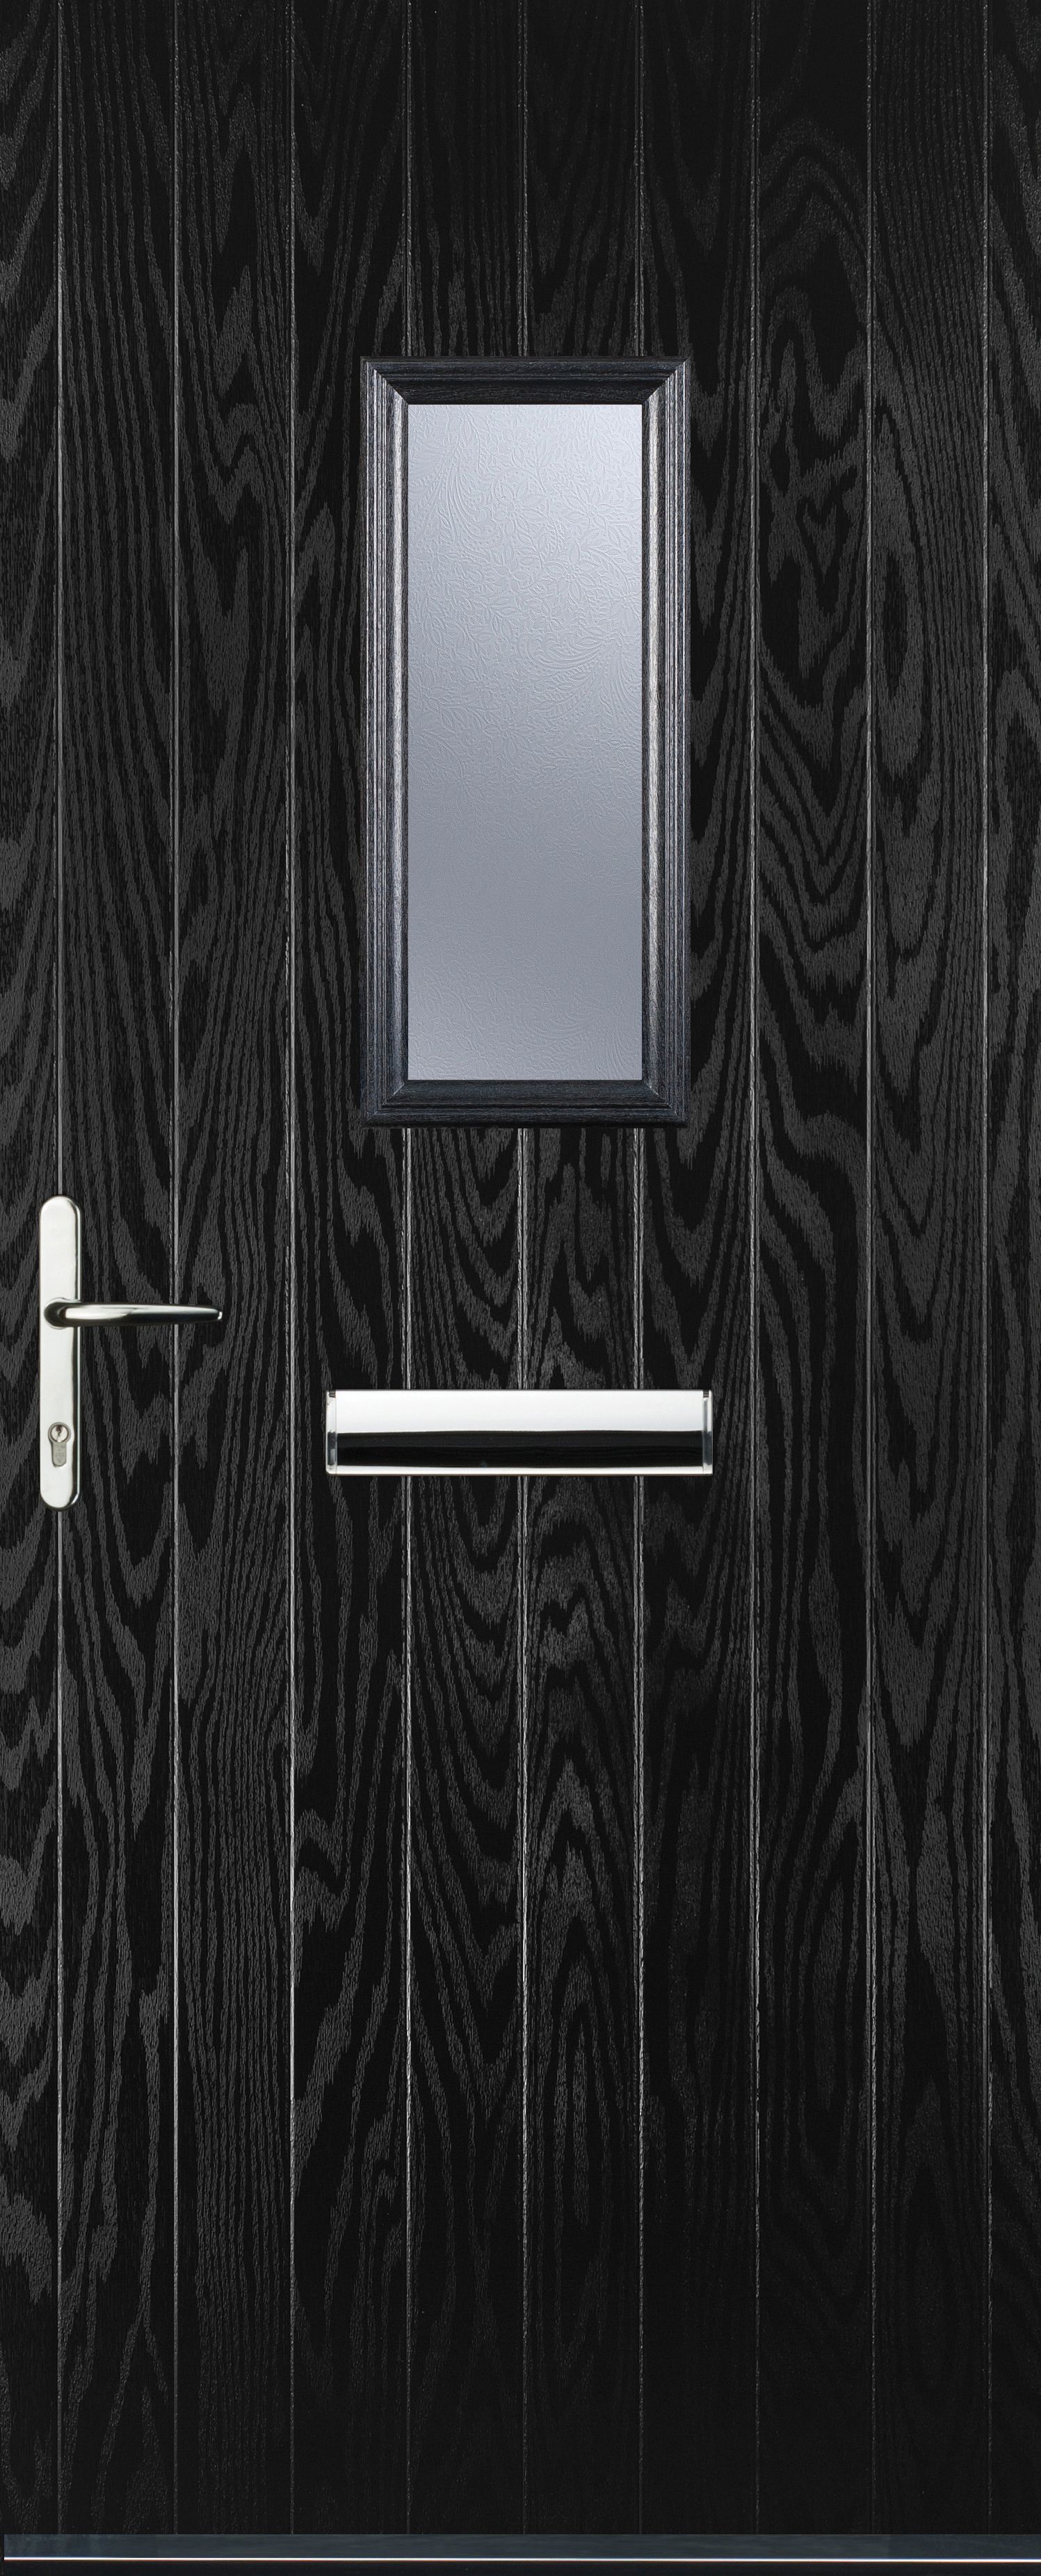 Image of Euramax 1 Square Right Hand Black Composite Door - 920 x 2100mm